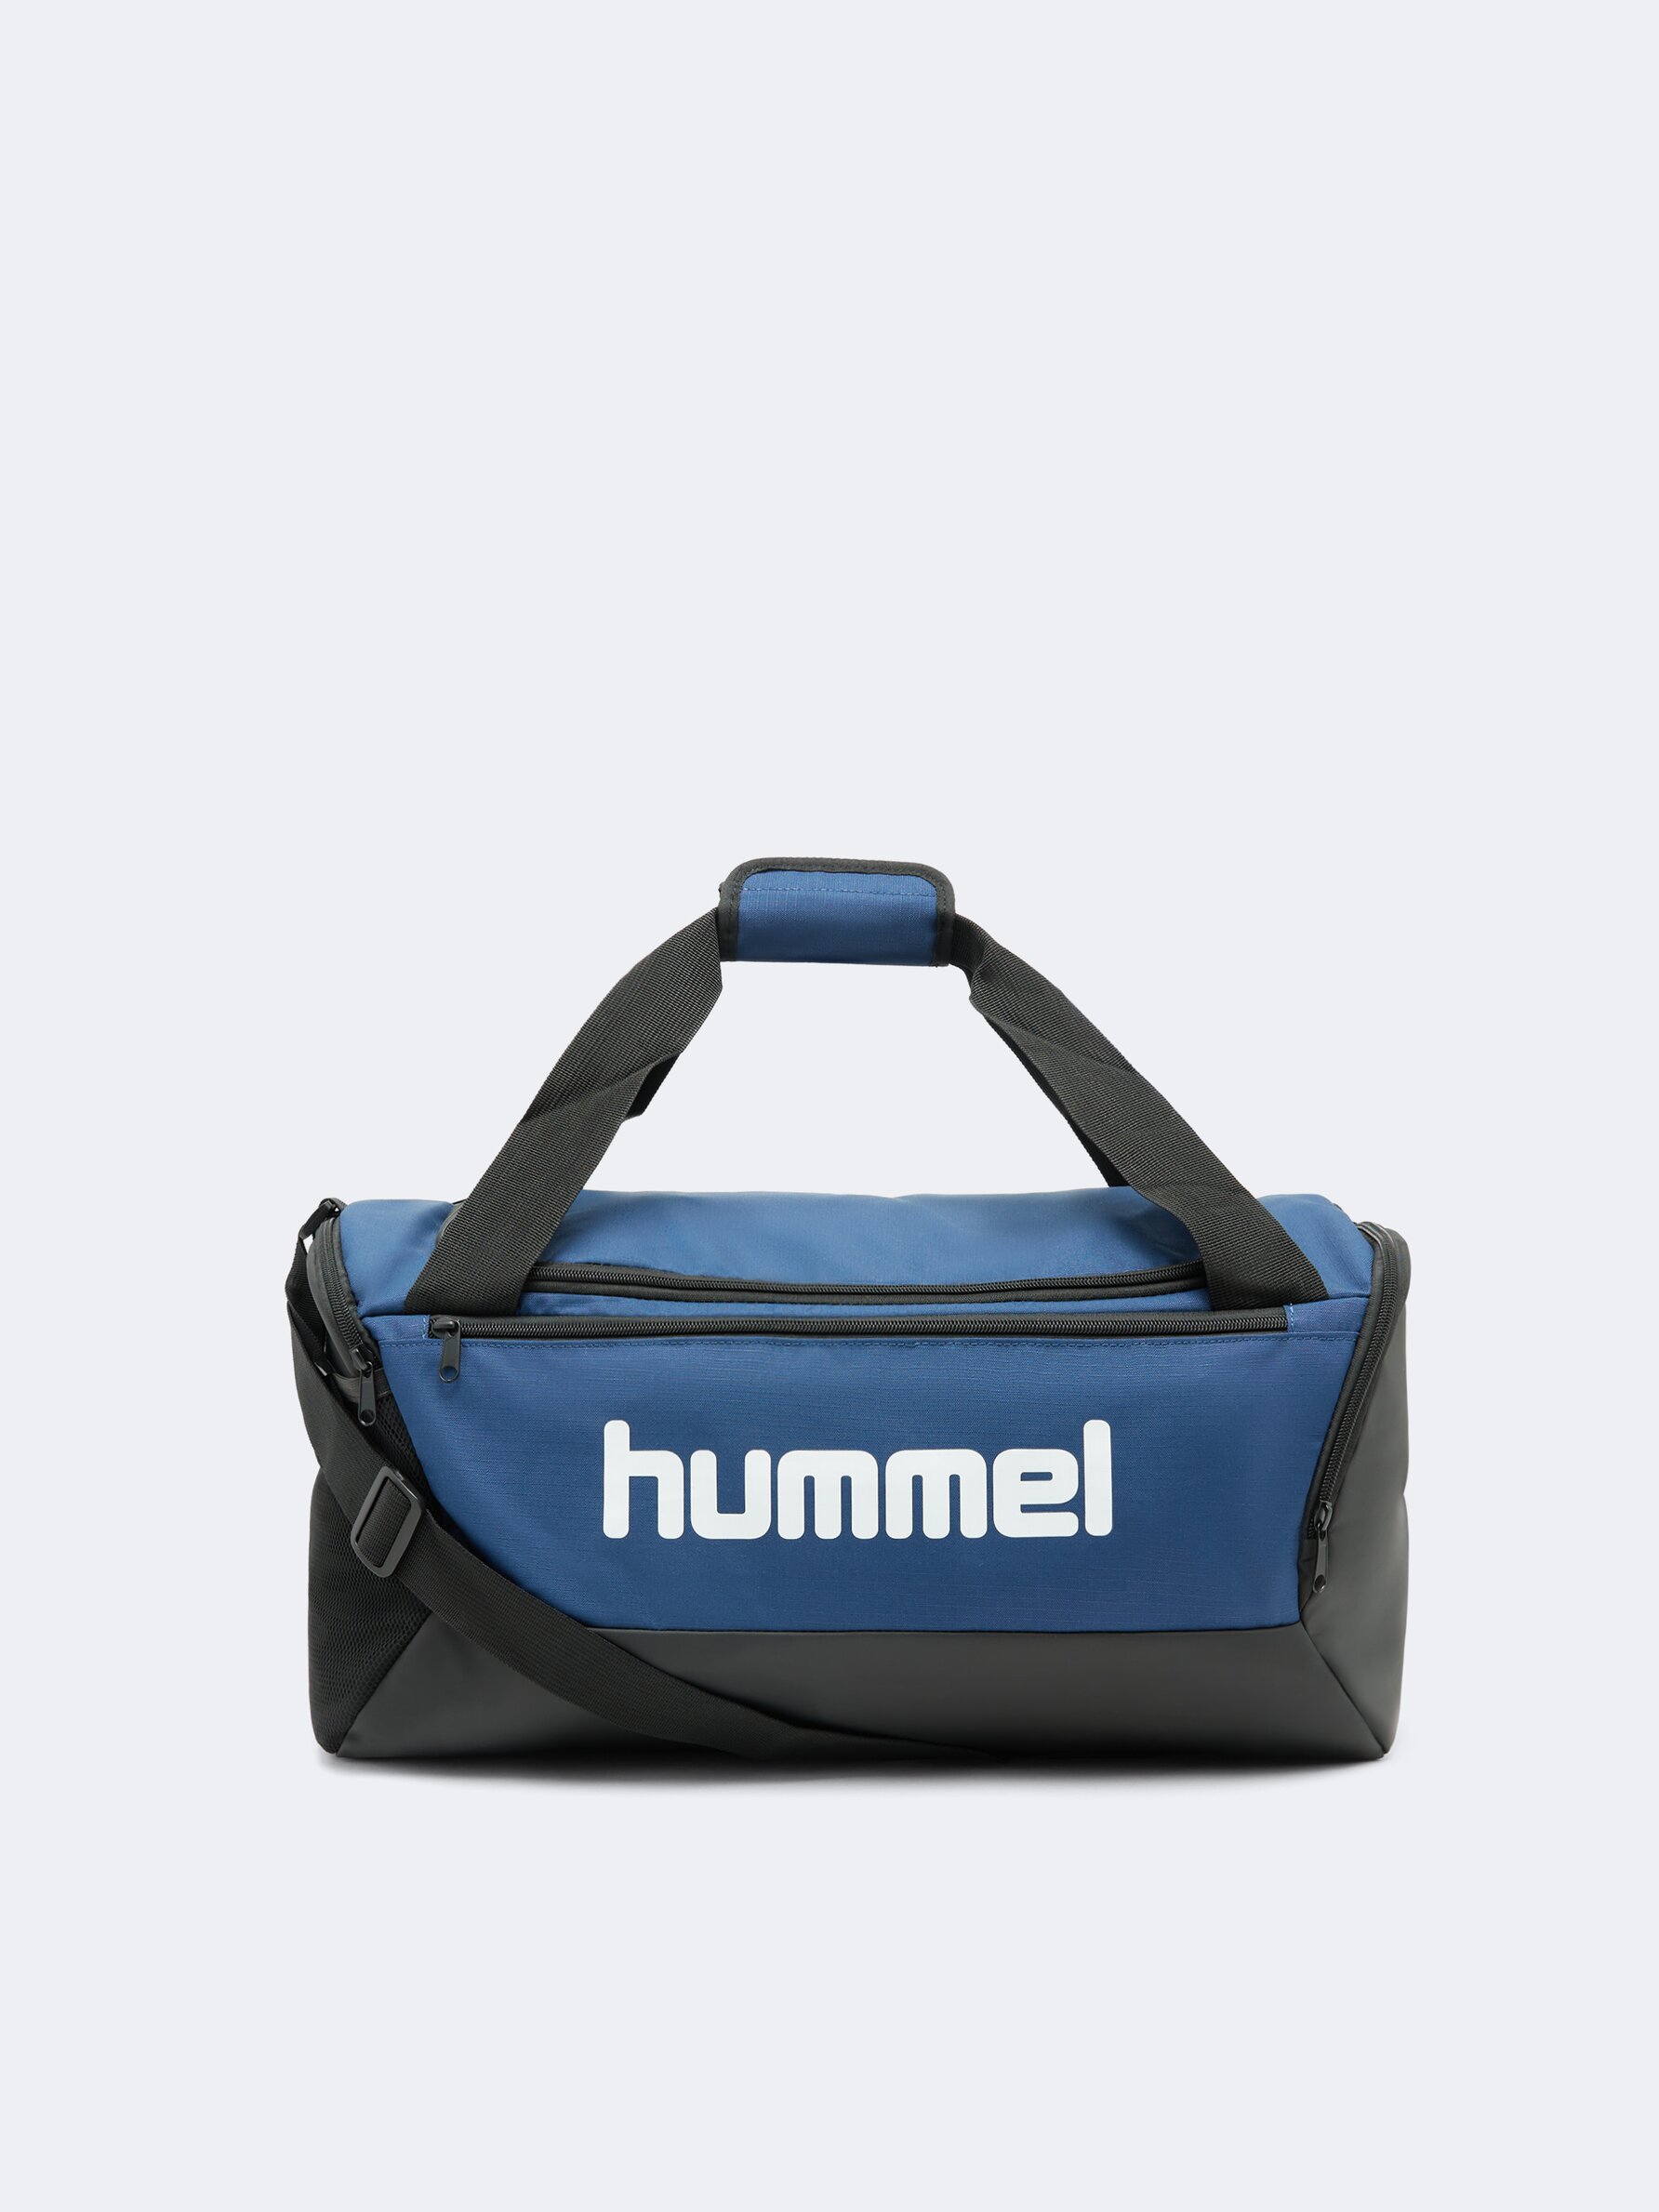 HUMMEL X LEFTIES SPORTS BAG - Hummel - BAGS | BACKPACKS - - | Spain (Canary Islands)